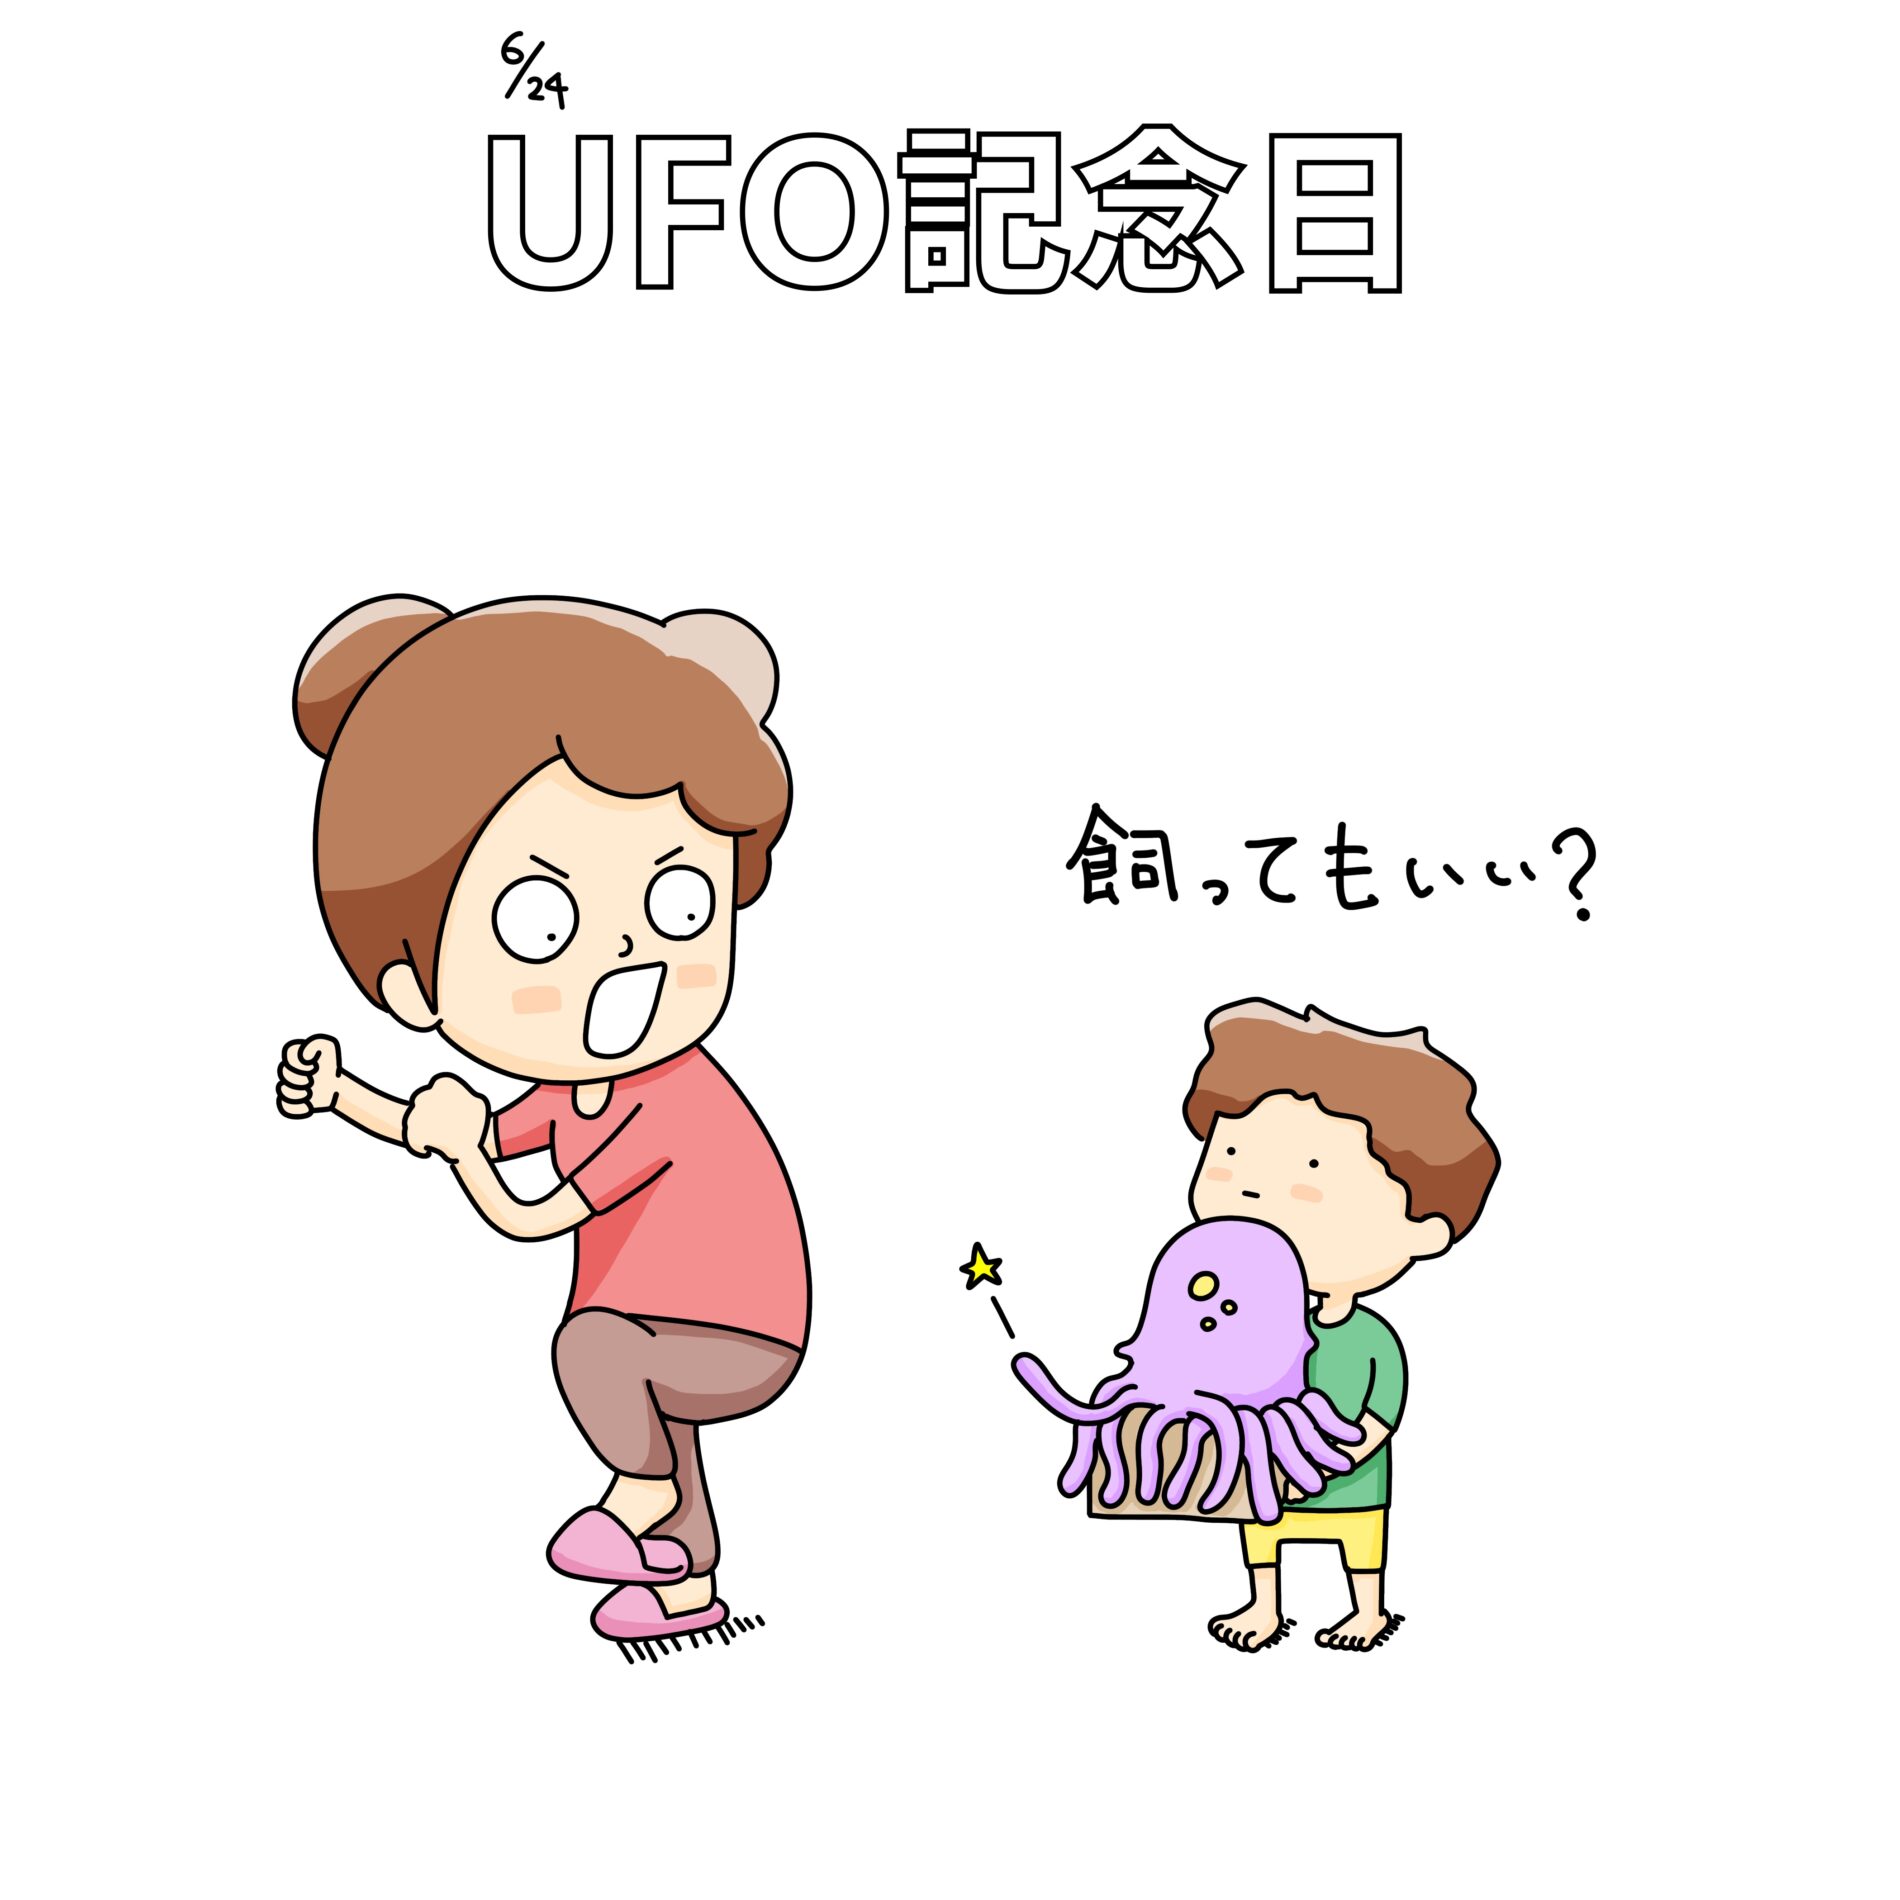 UFO記念日